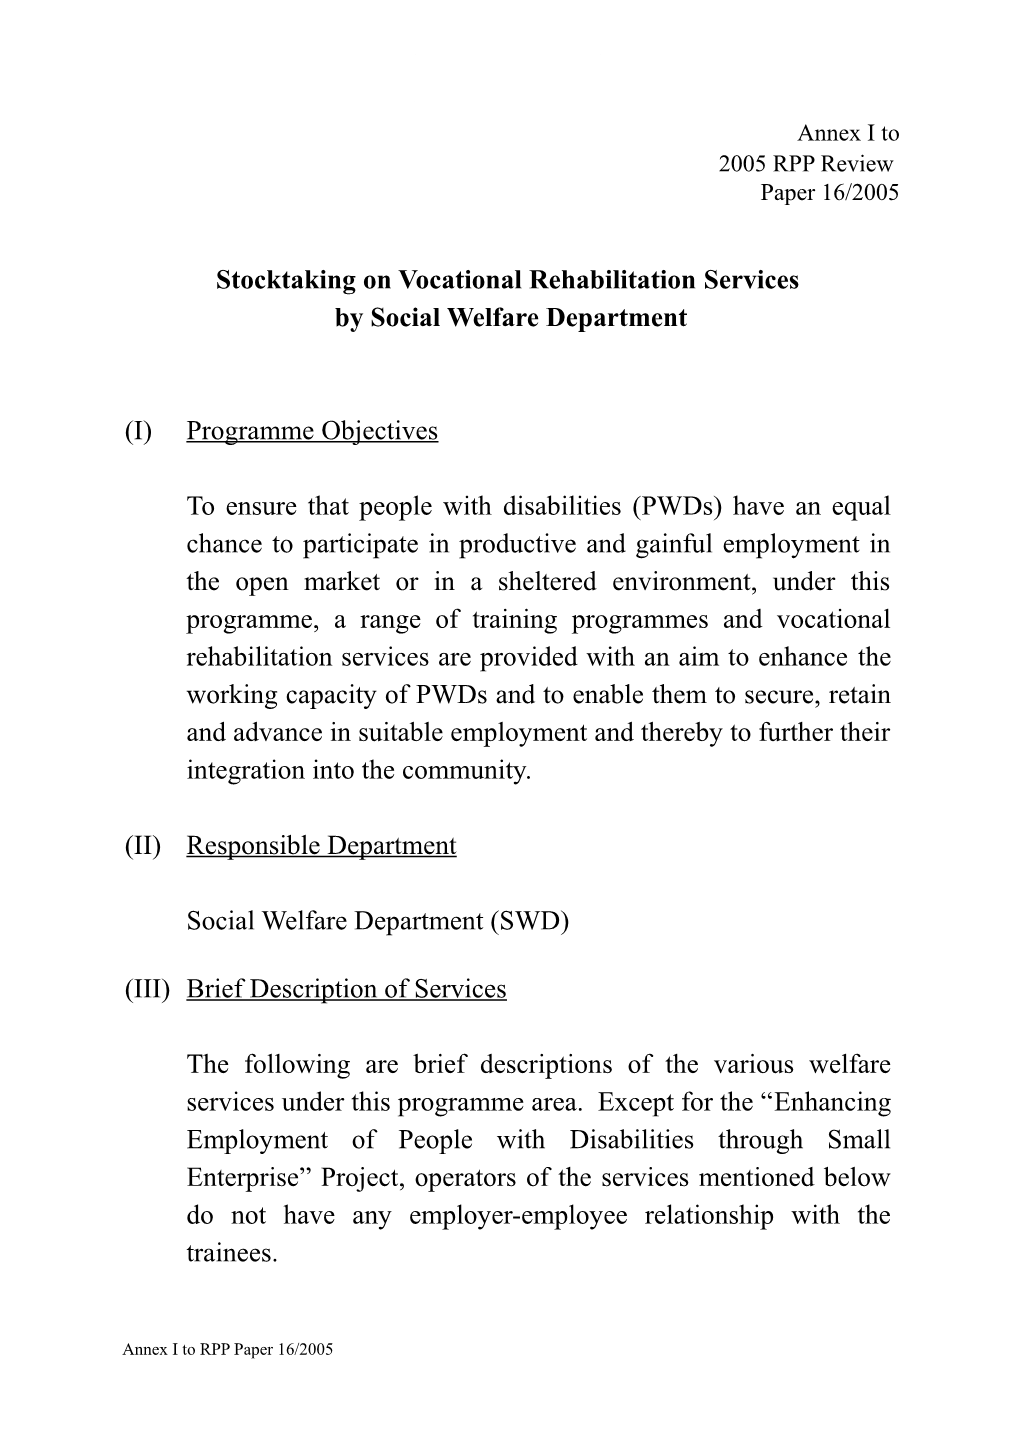 Stocktaking on Vocational Rehabilitation Services